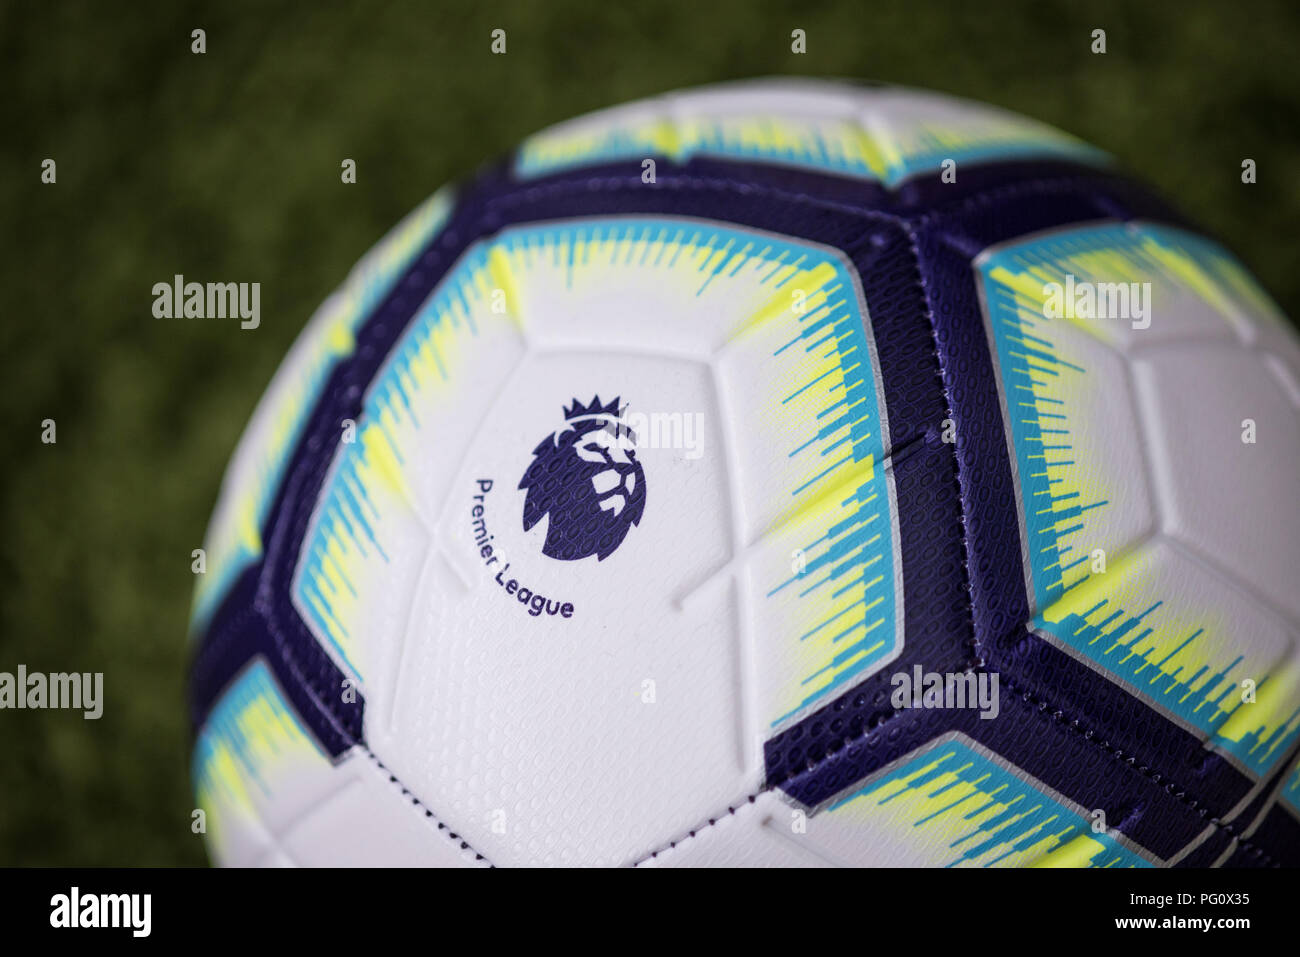 Nike Merlin Ball für 2018/19 Premier League Saison. Stockfoto